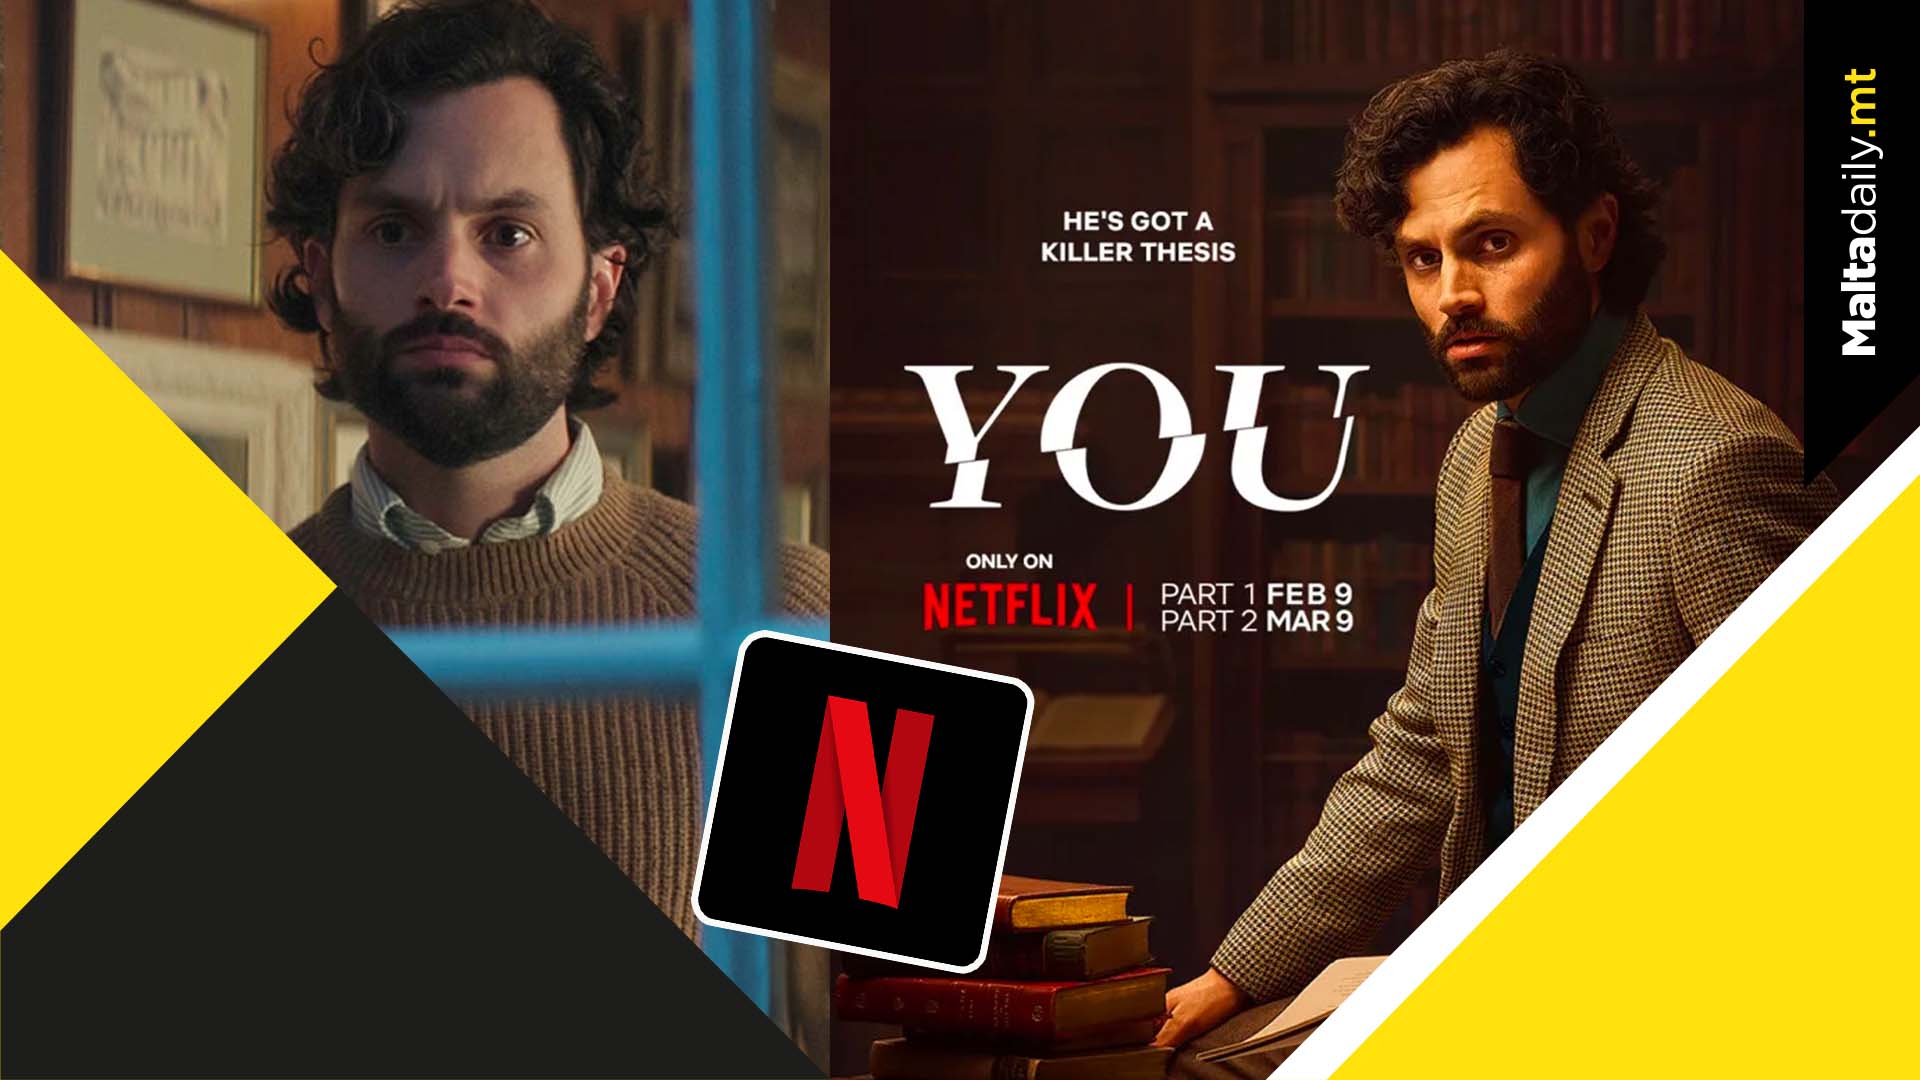 Netflix drops ‘You’ Season 4 Trailer returning February 9th